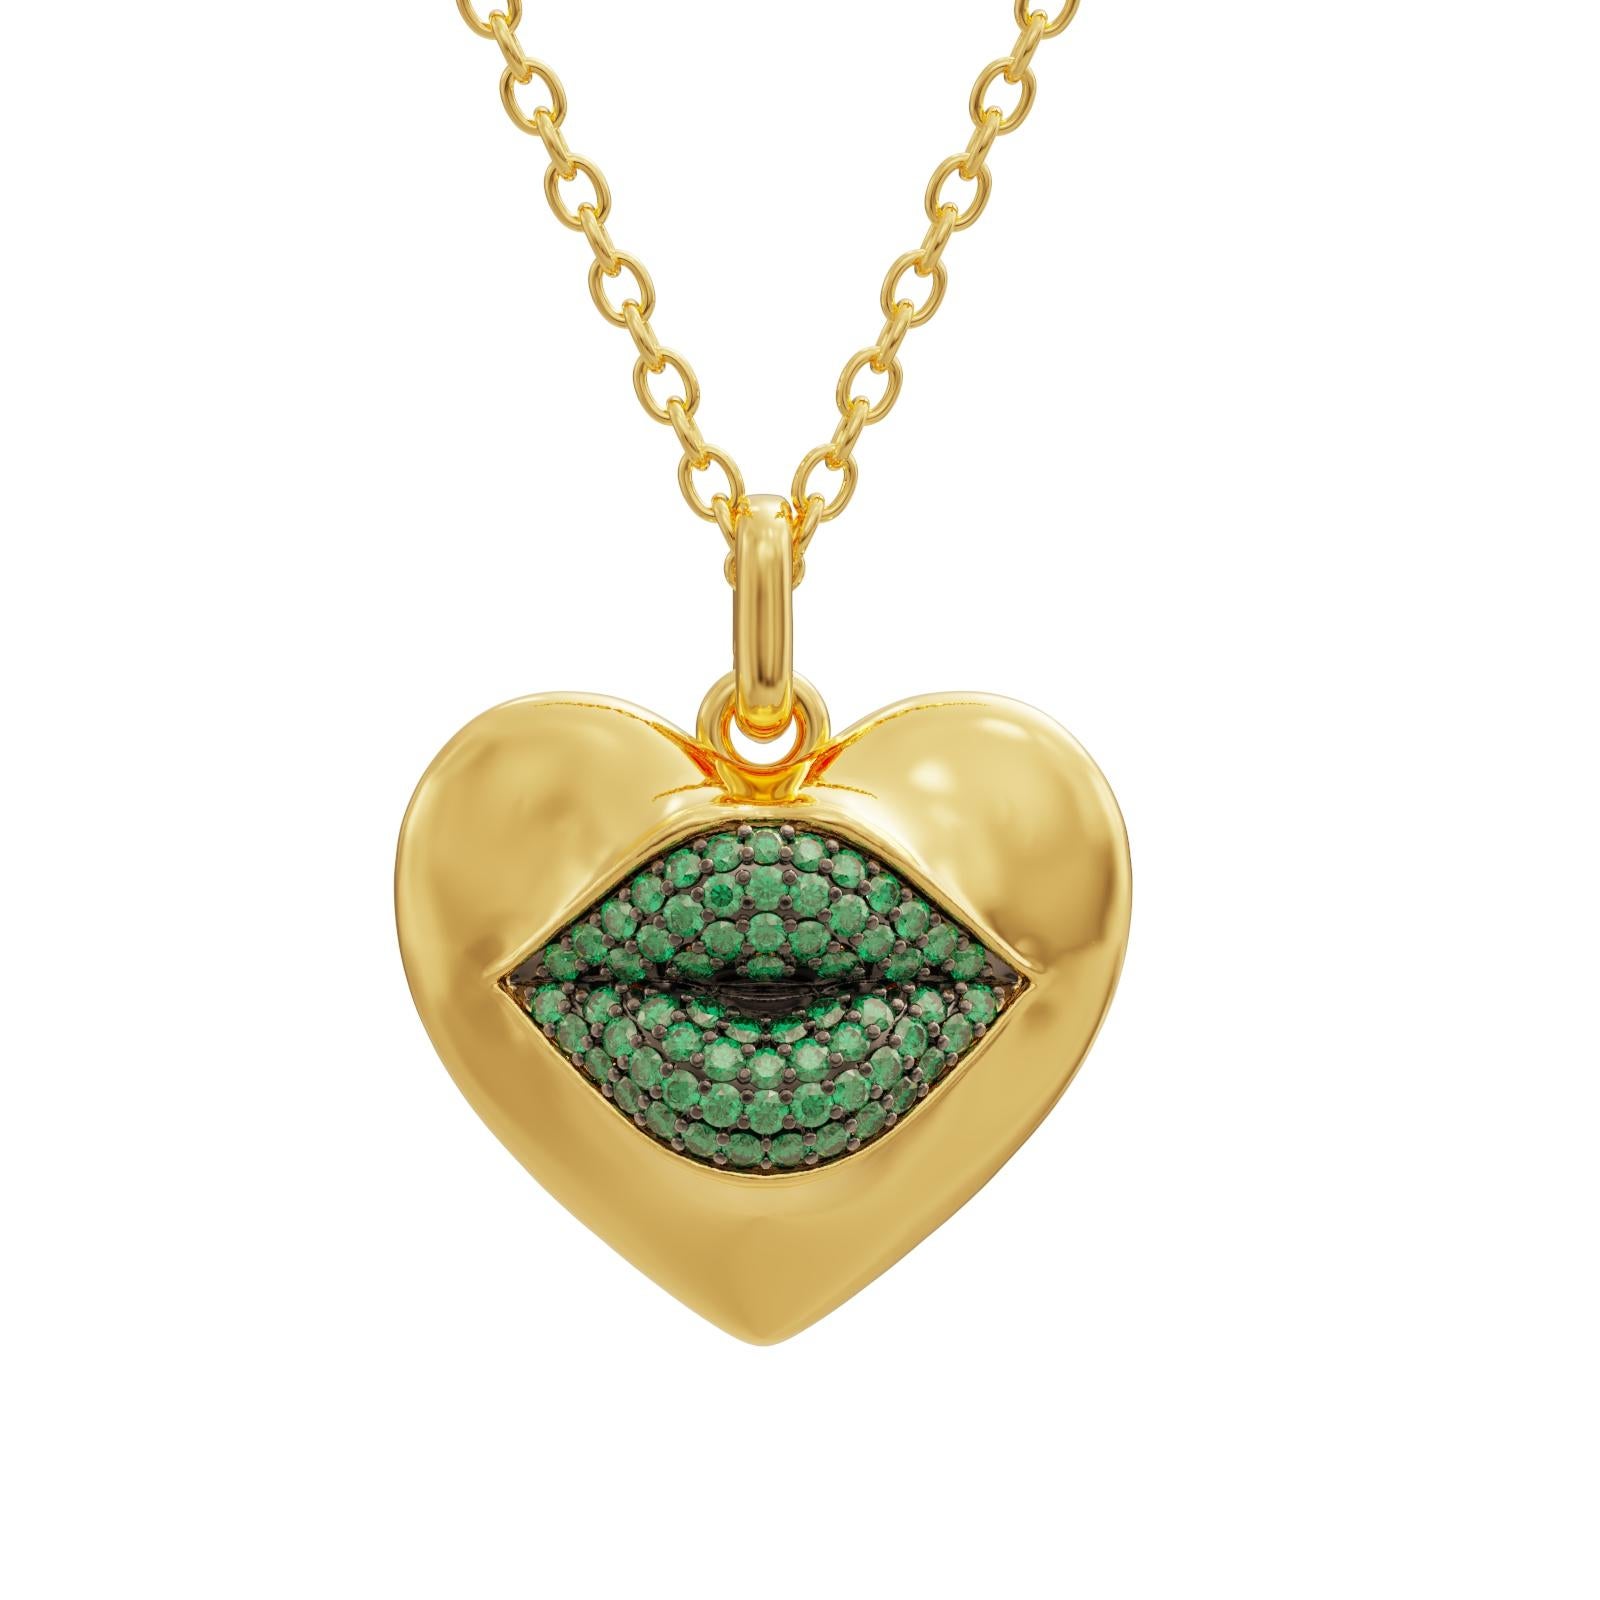 Taille brillant Naimah, mini collier fantaisie « Love Lips » vert en vente